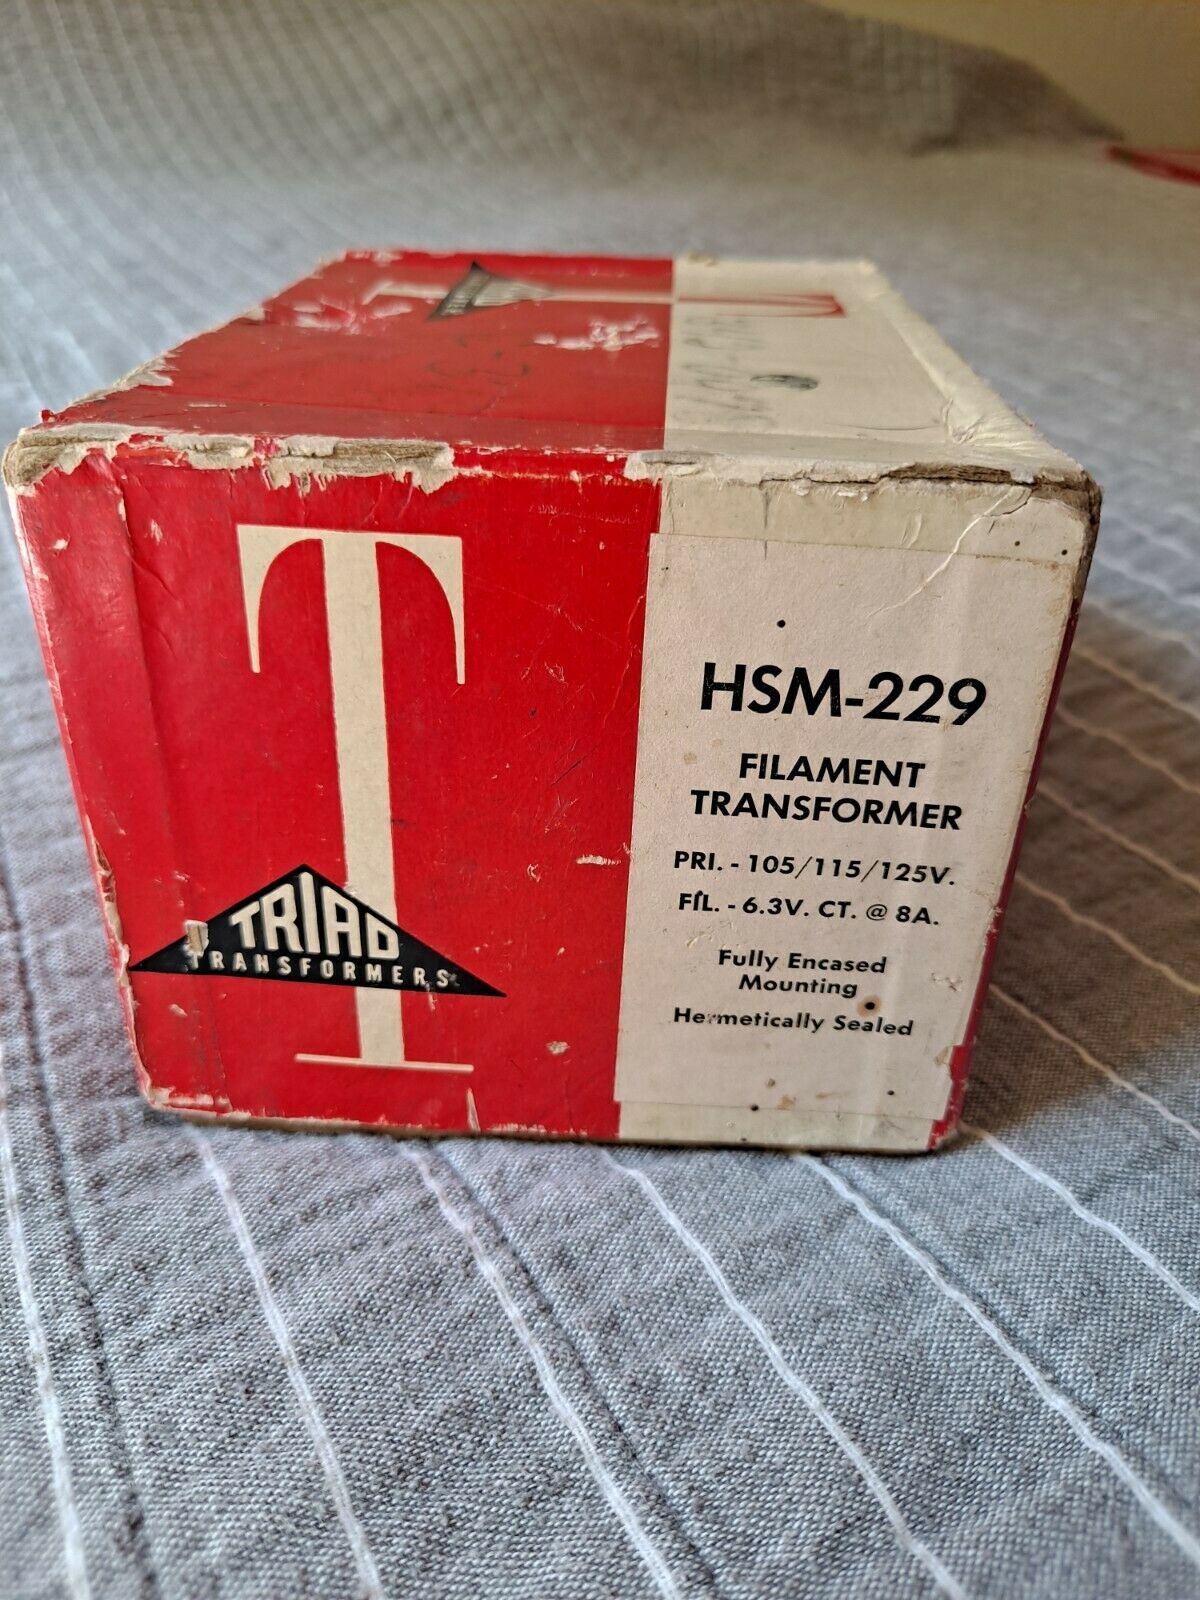 Triad Hsm-229 Filament Transformer Pri= 105/115/125v To Fil= 6.3v Ct @ 8a